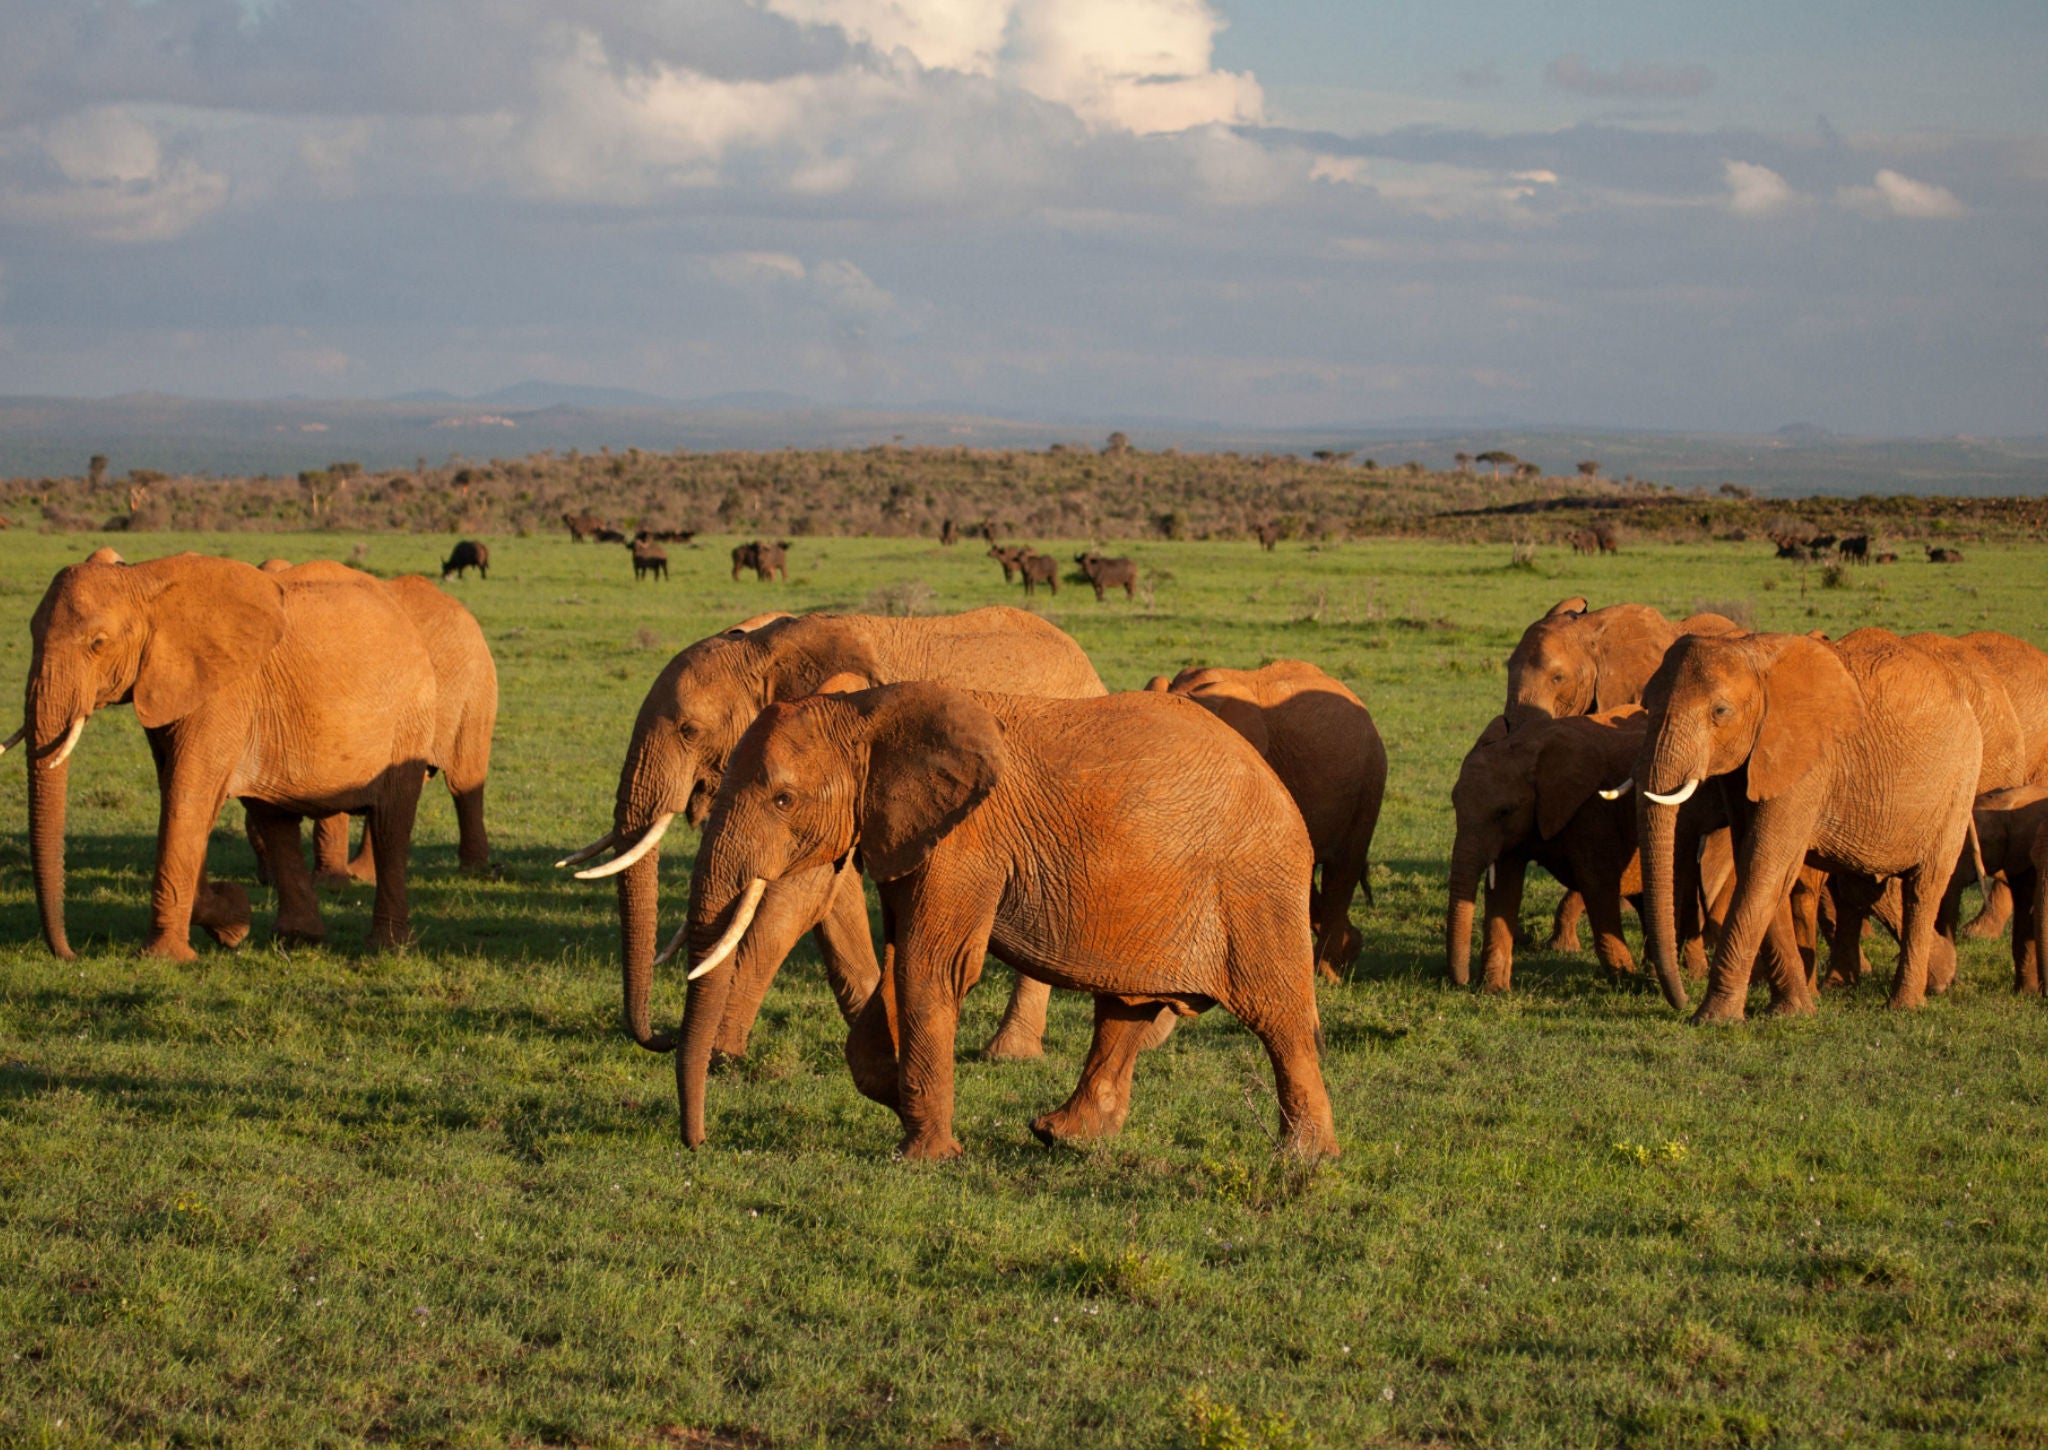 Elephants roam the Loisaba Conservancy